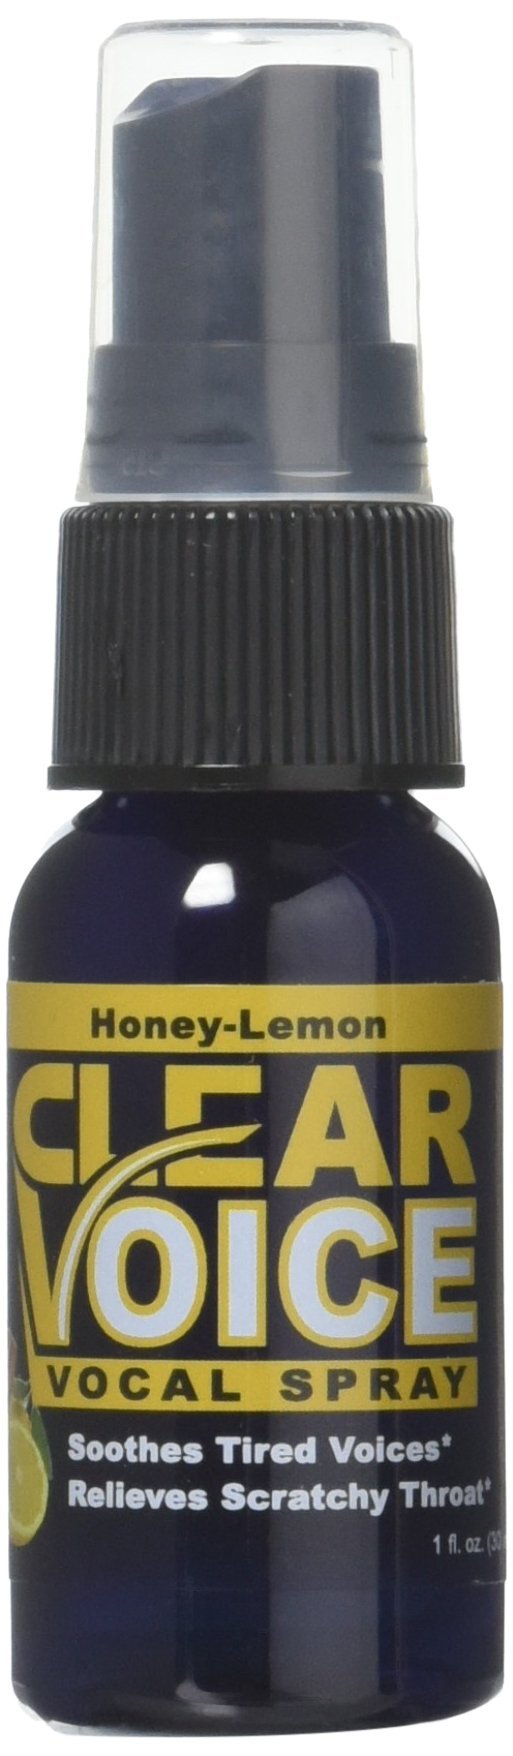 Clear Voice Vocal Spray Honey Lemon 1 Fl Oz (Pack of 1)